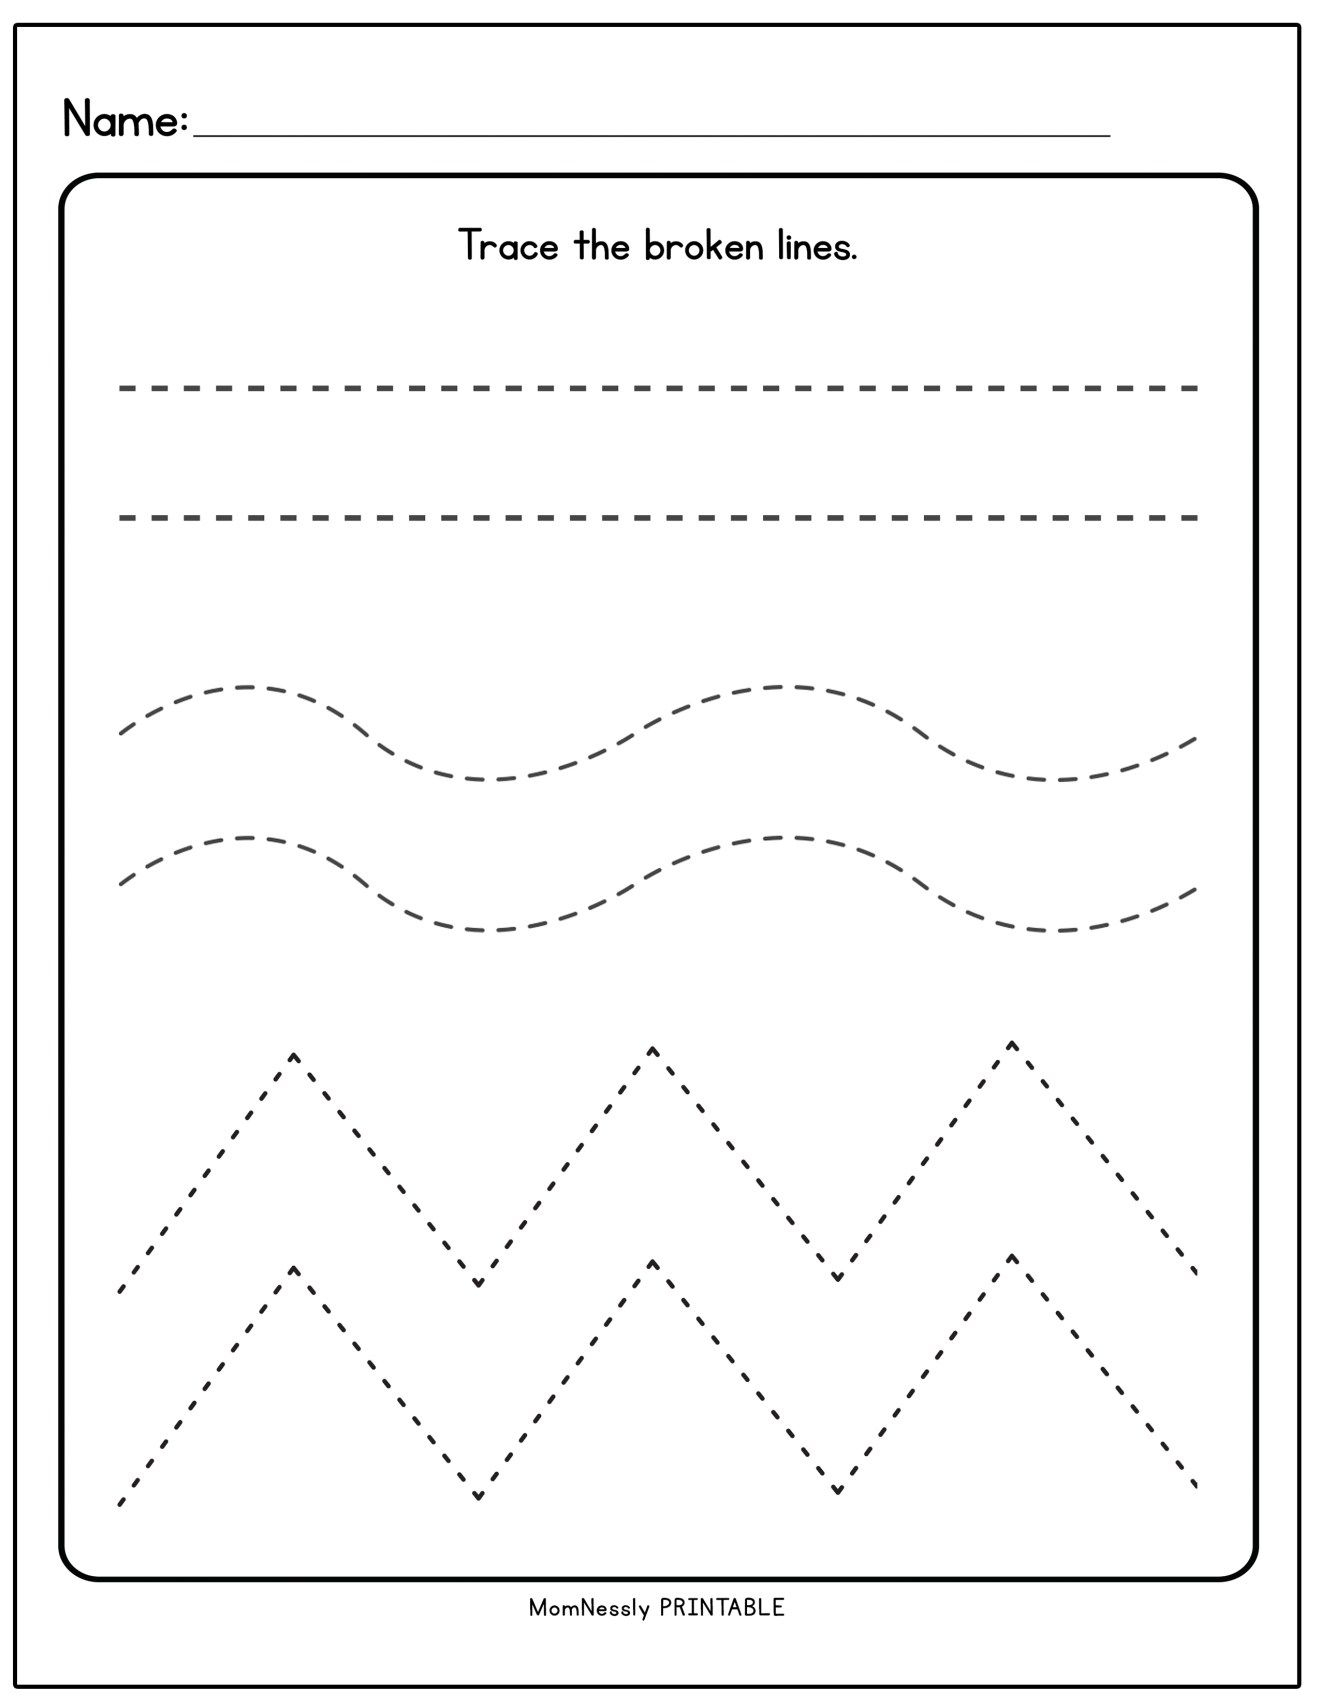 preschool-line-tracing-worksheets-in-2020-8eb